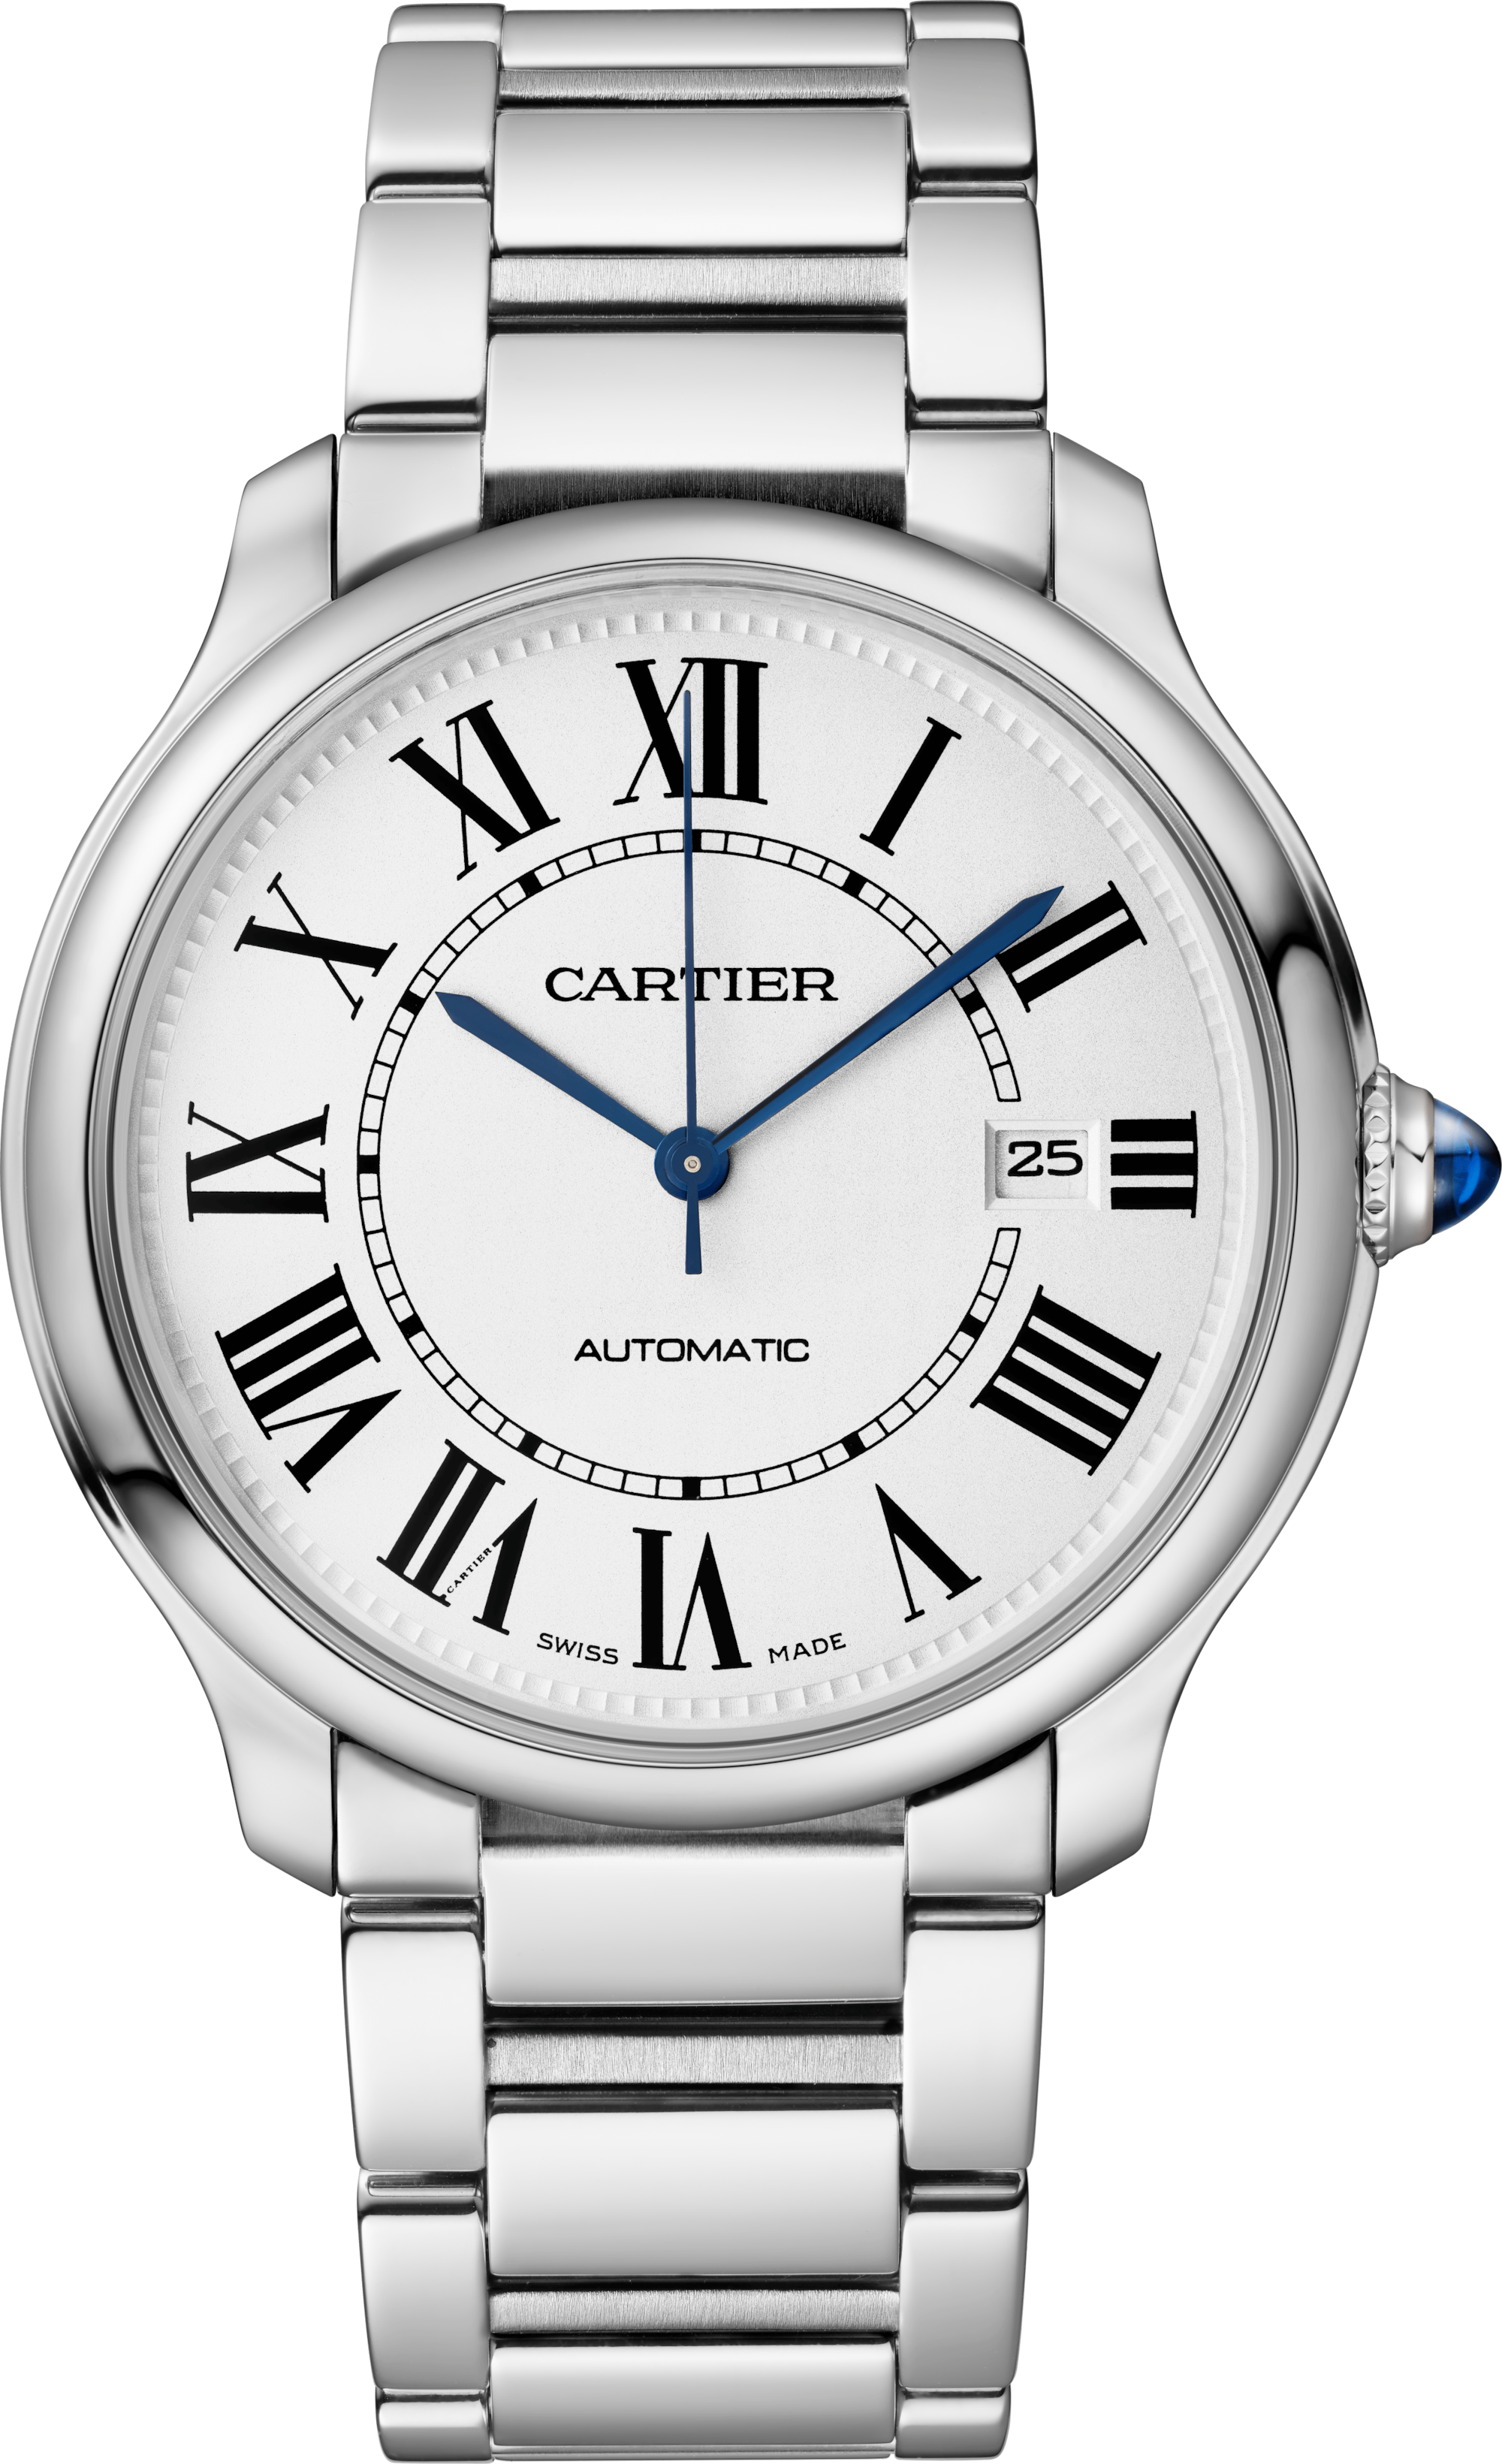 Must de Cartier Round Watch